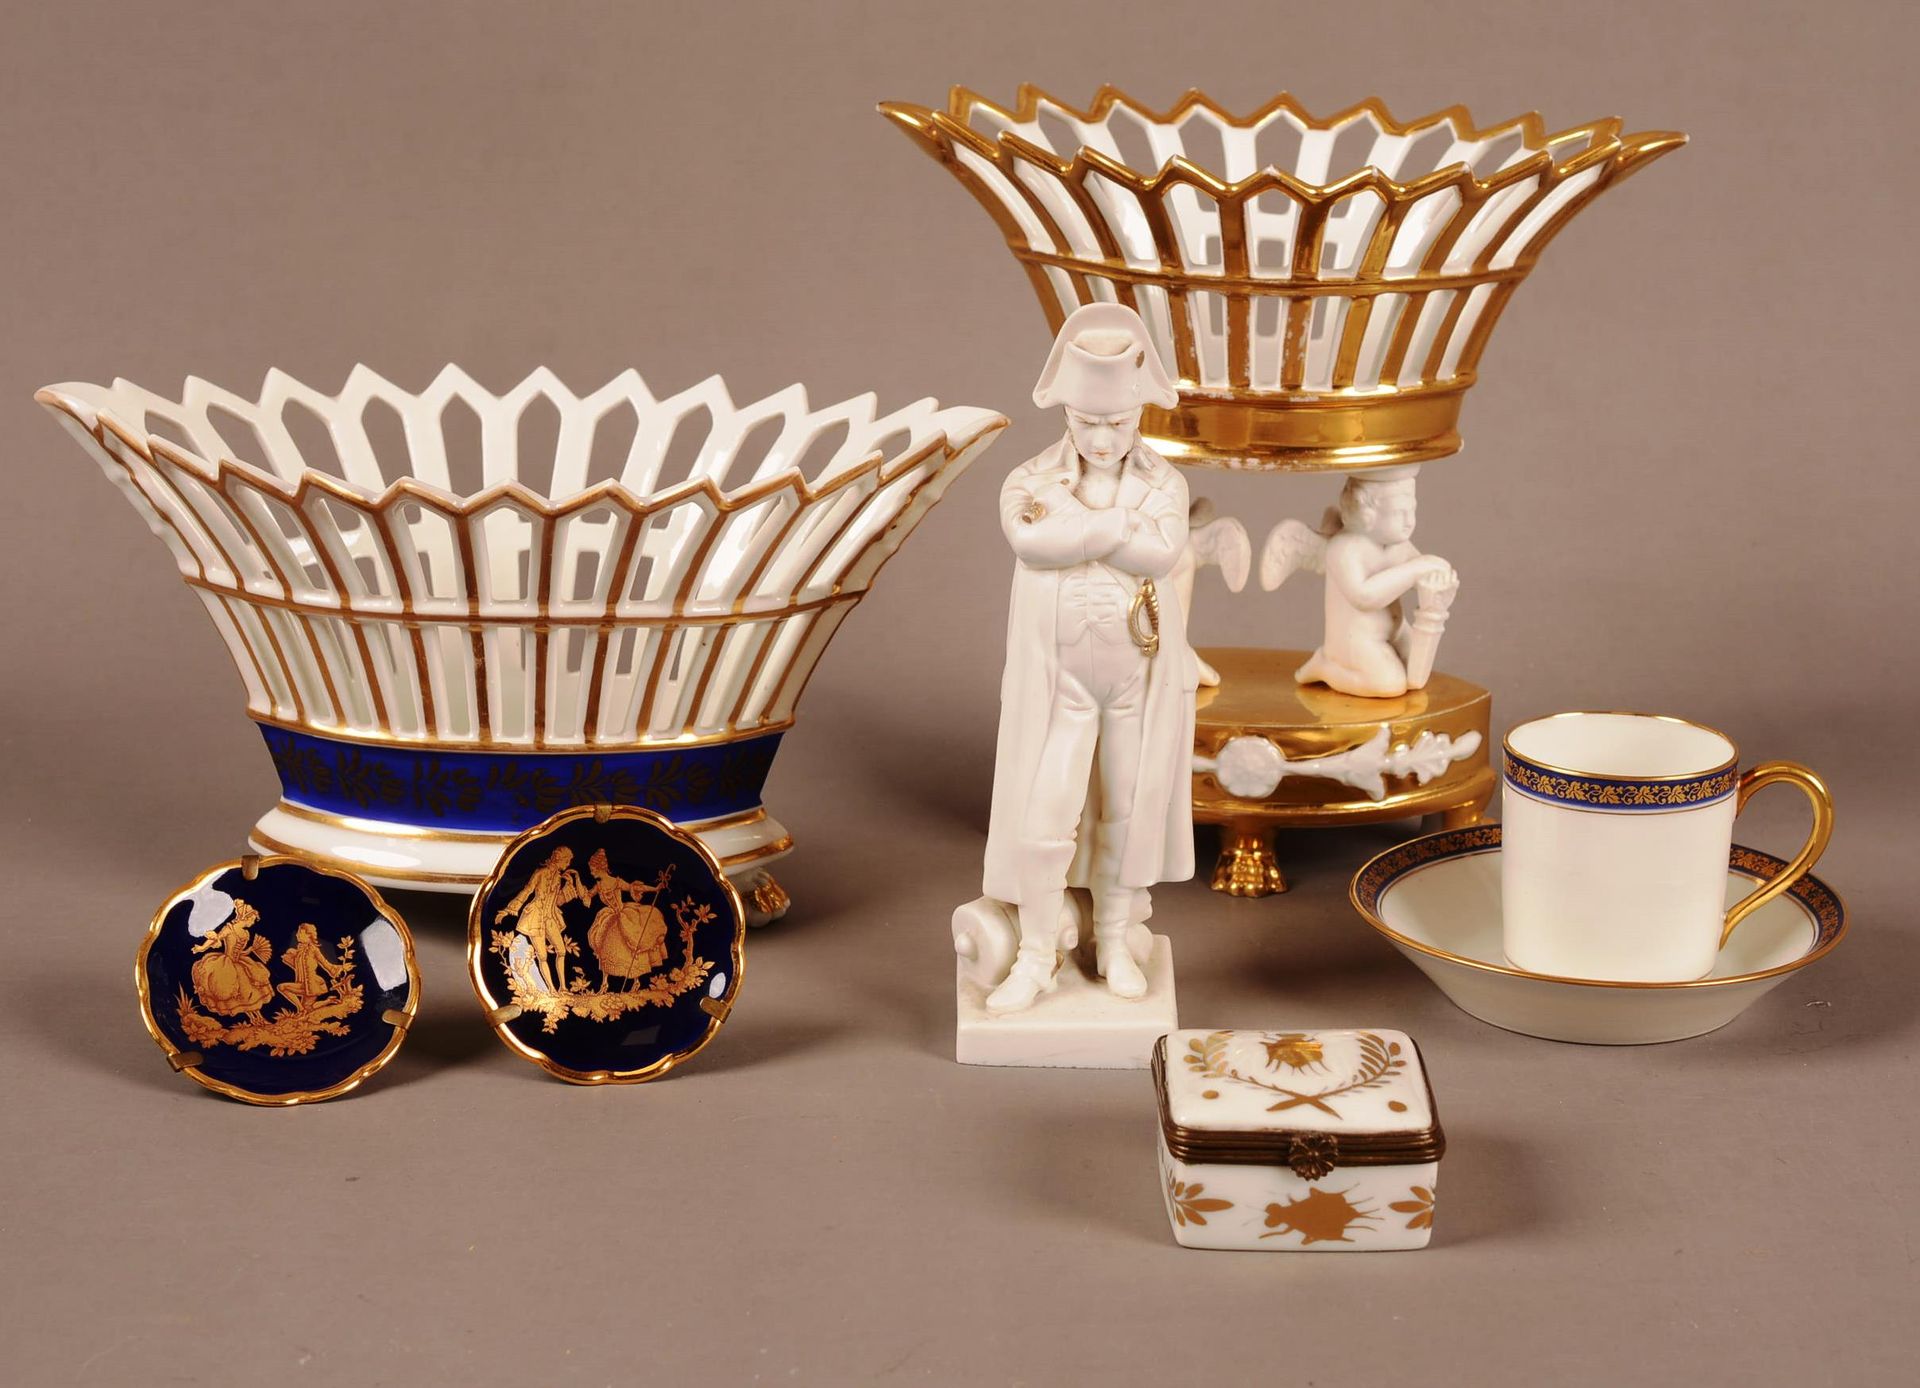 Suite de 7 éléments en porcelaine 由7个元素组成的瓷器或饼干套装。

拿破仑--中心摆件--盒子--盘子和杯子。